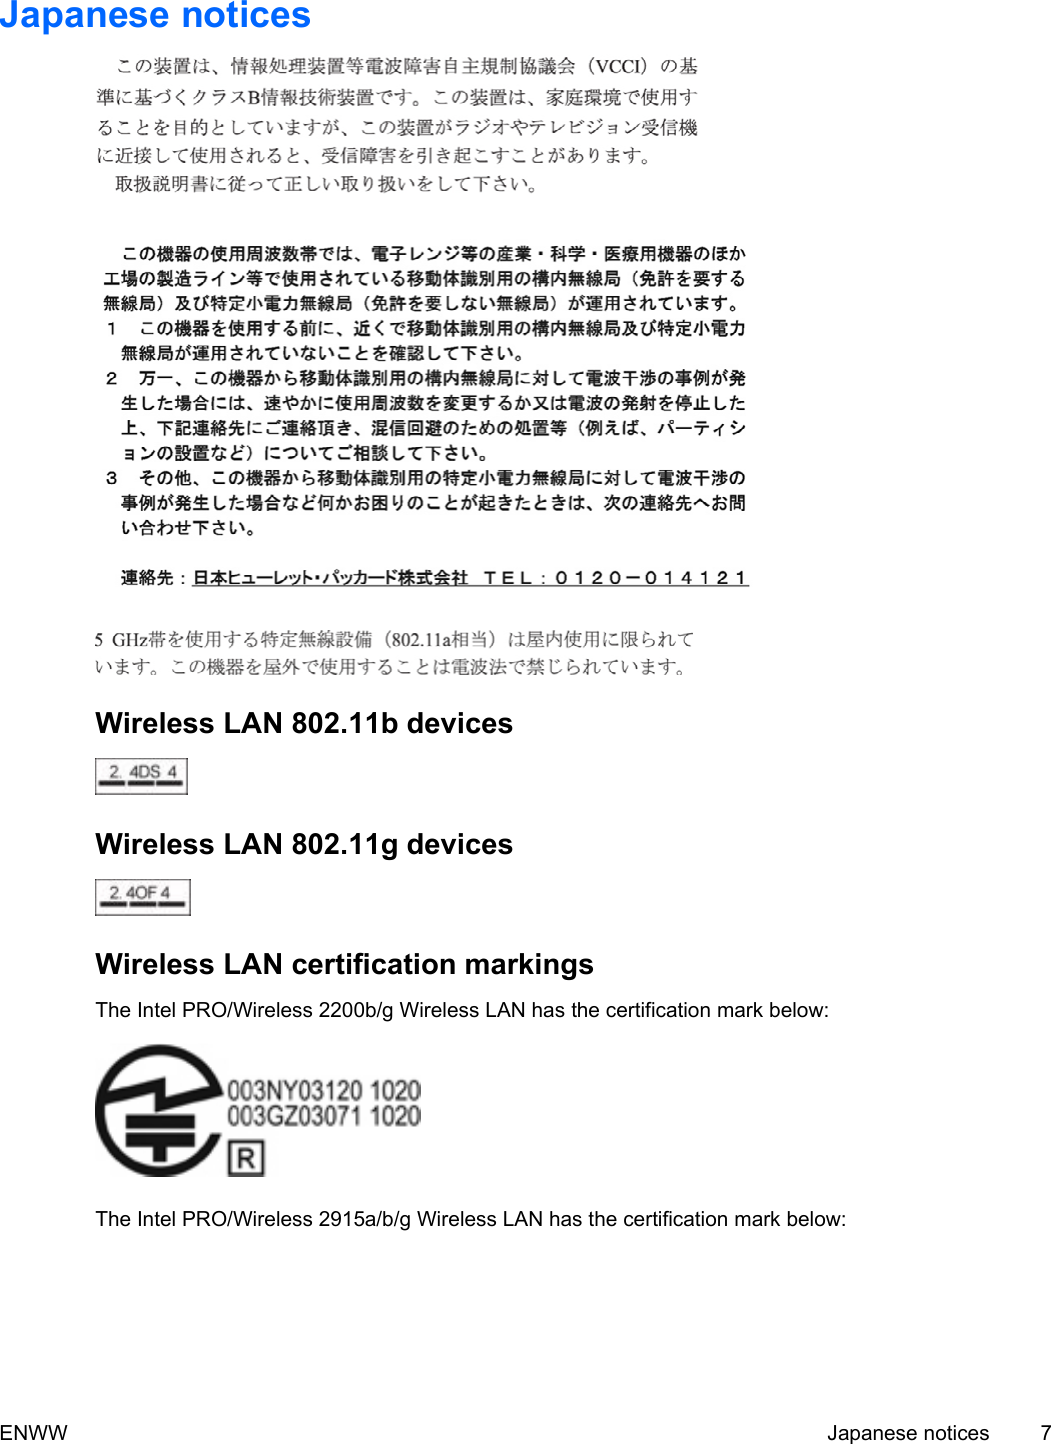 Japanese noticesWireless LAN 802.11b devicesWireless LAN 802.11g devicesWireless LAN certification markingsThe Intel PRO/Wireless 2200b/g Wireless LAN has the certification mark below:The Intel PRO/Wireless 2915a/b/g Wireless LAN has the certification mark below:ENWW Japanese notices 7